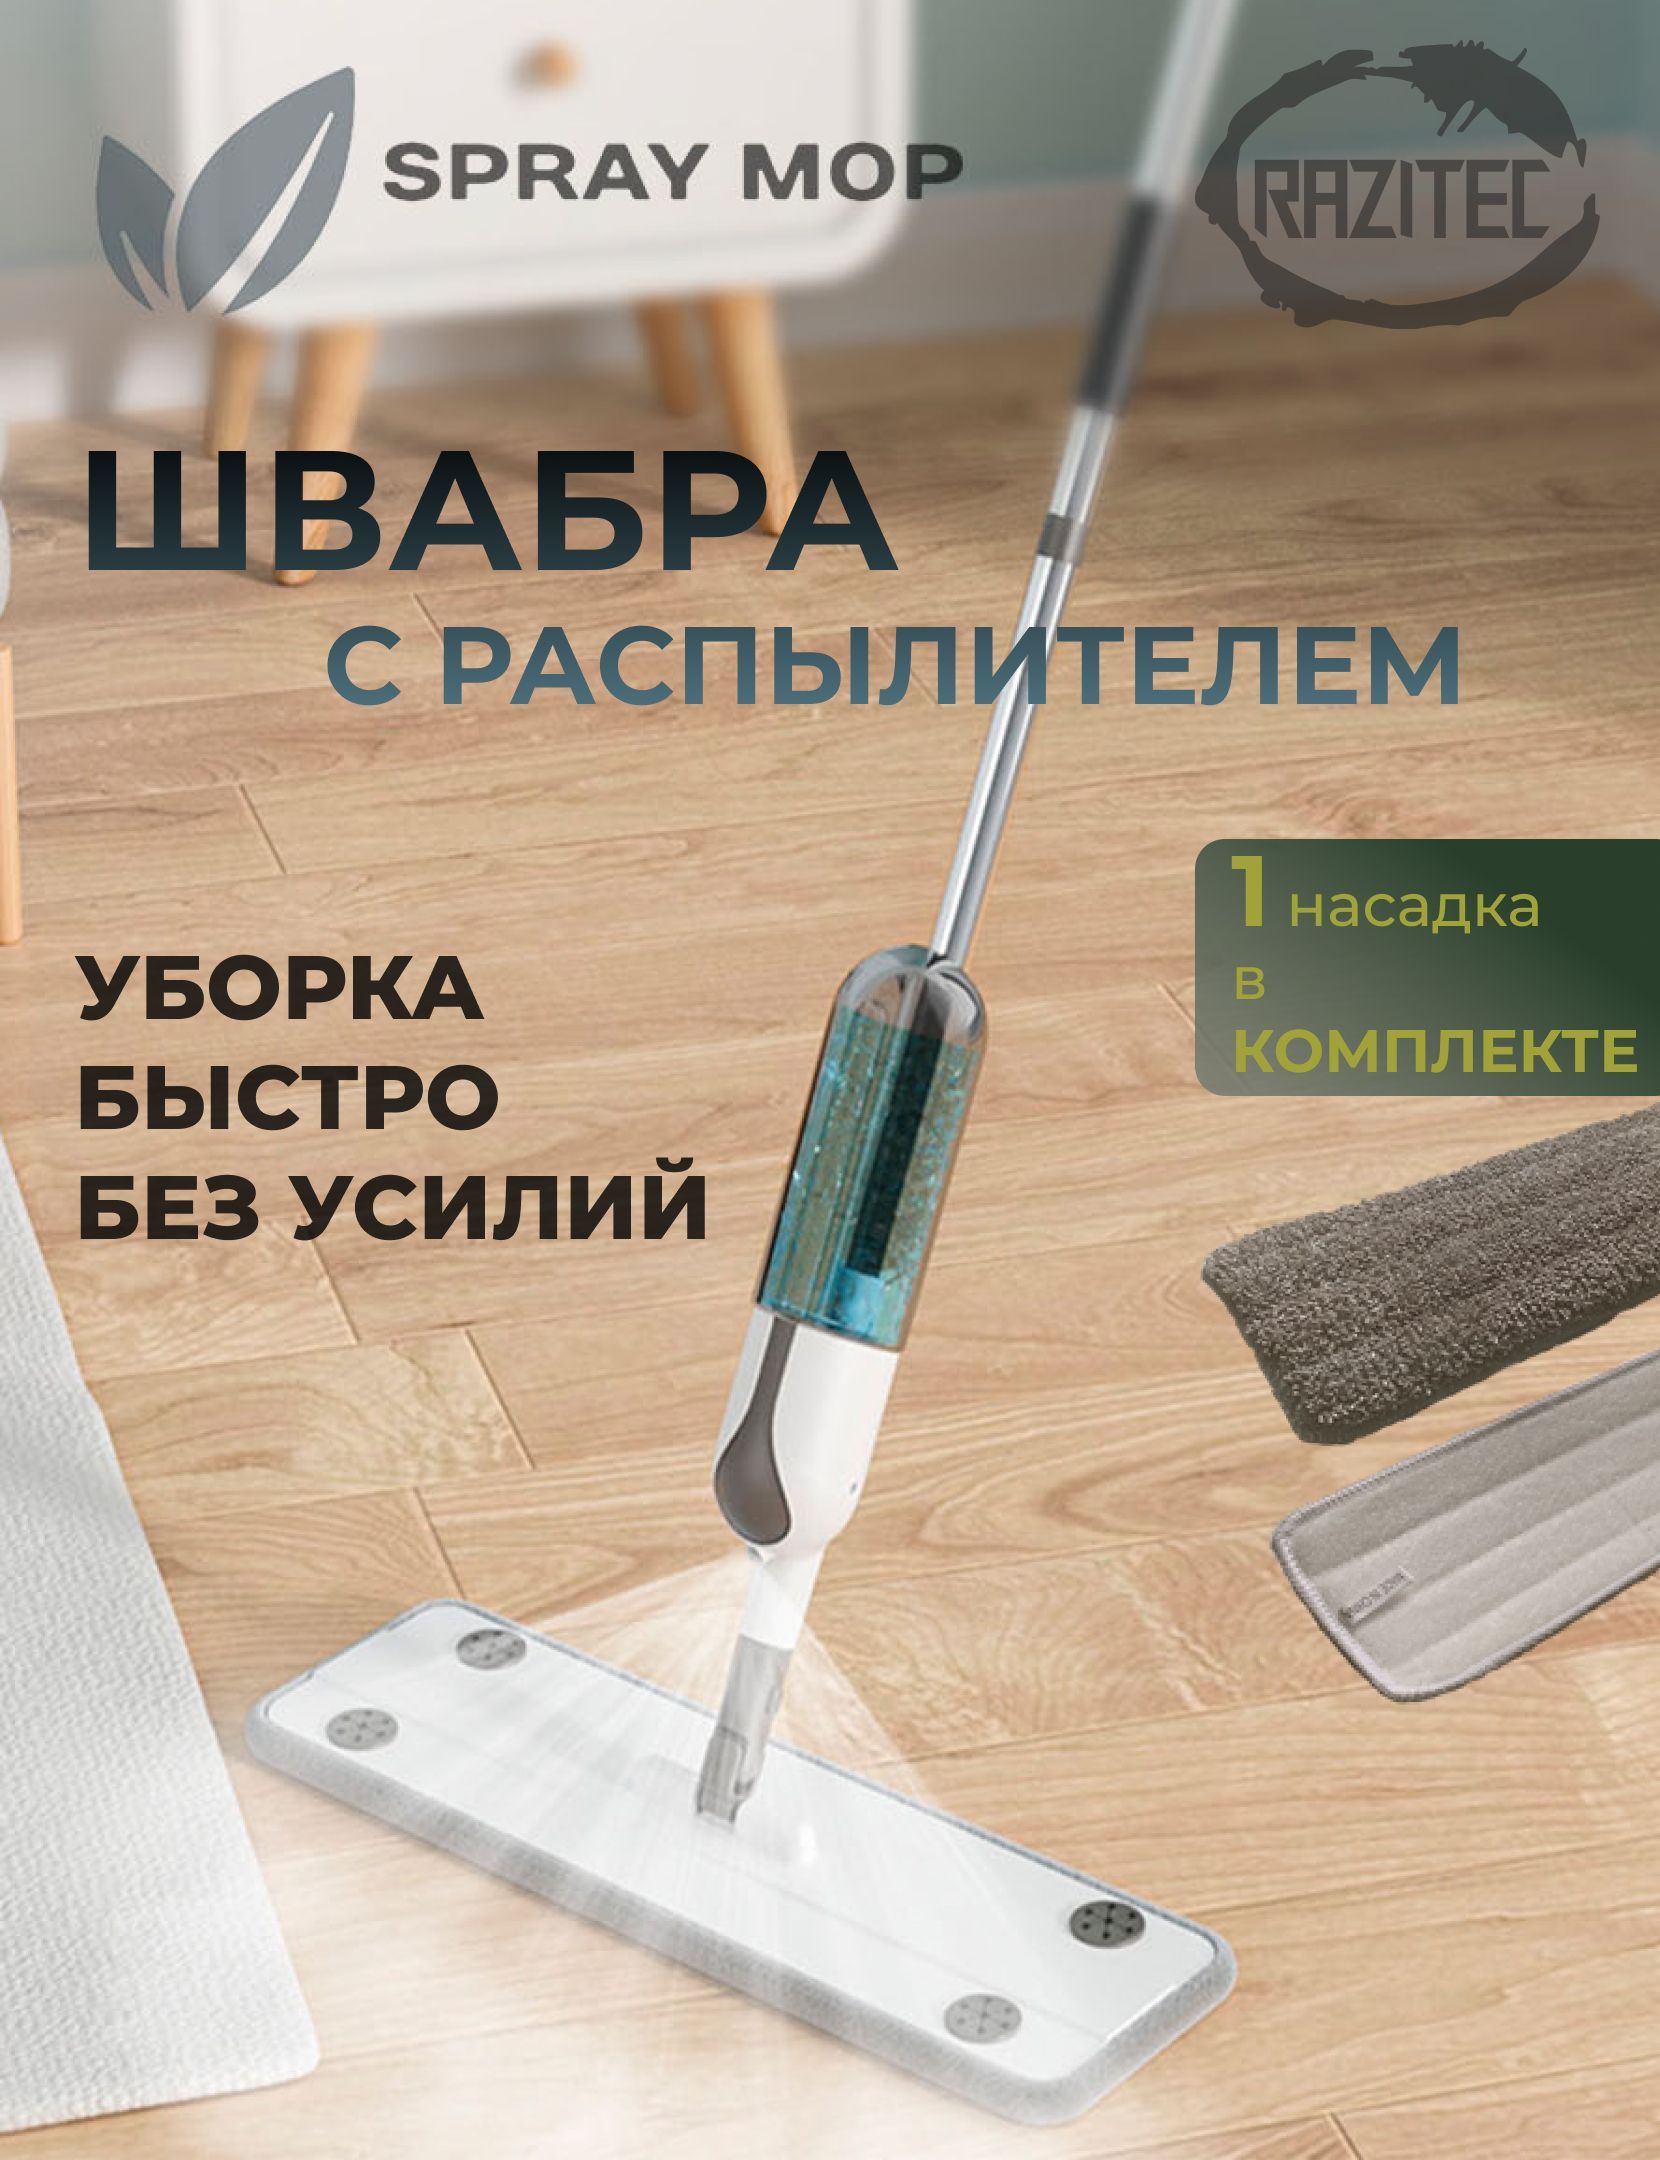 Швабра Spray Mop (Спрей Моп) с распылителем , цена грн, купить на prachka-mira.ru • prachka-mira.ru